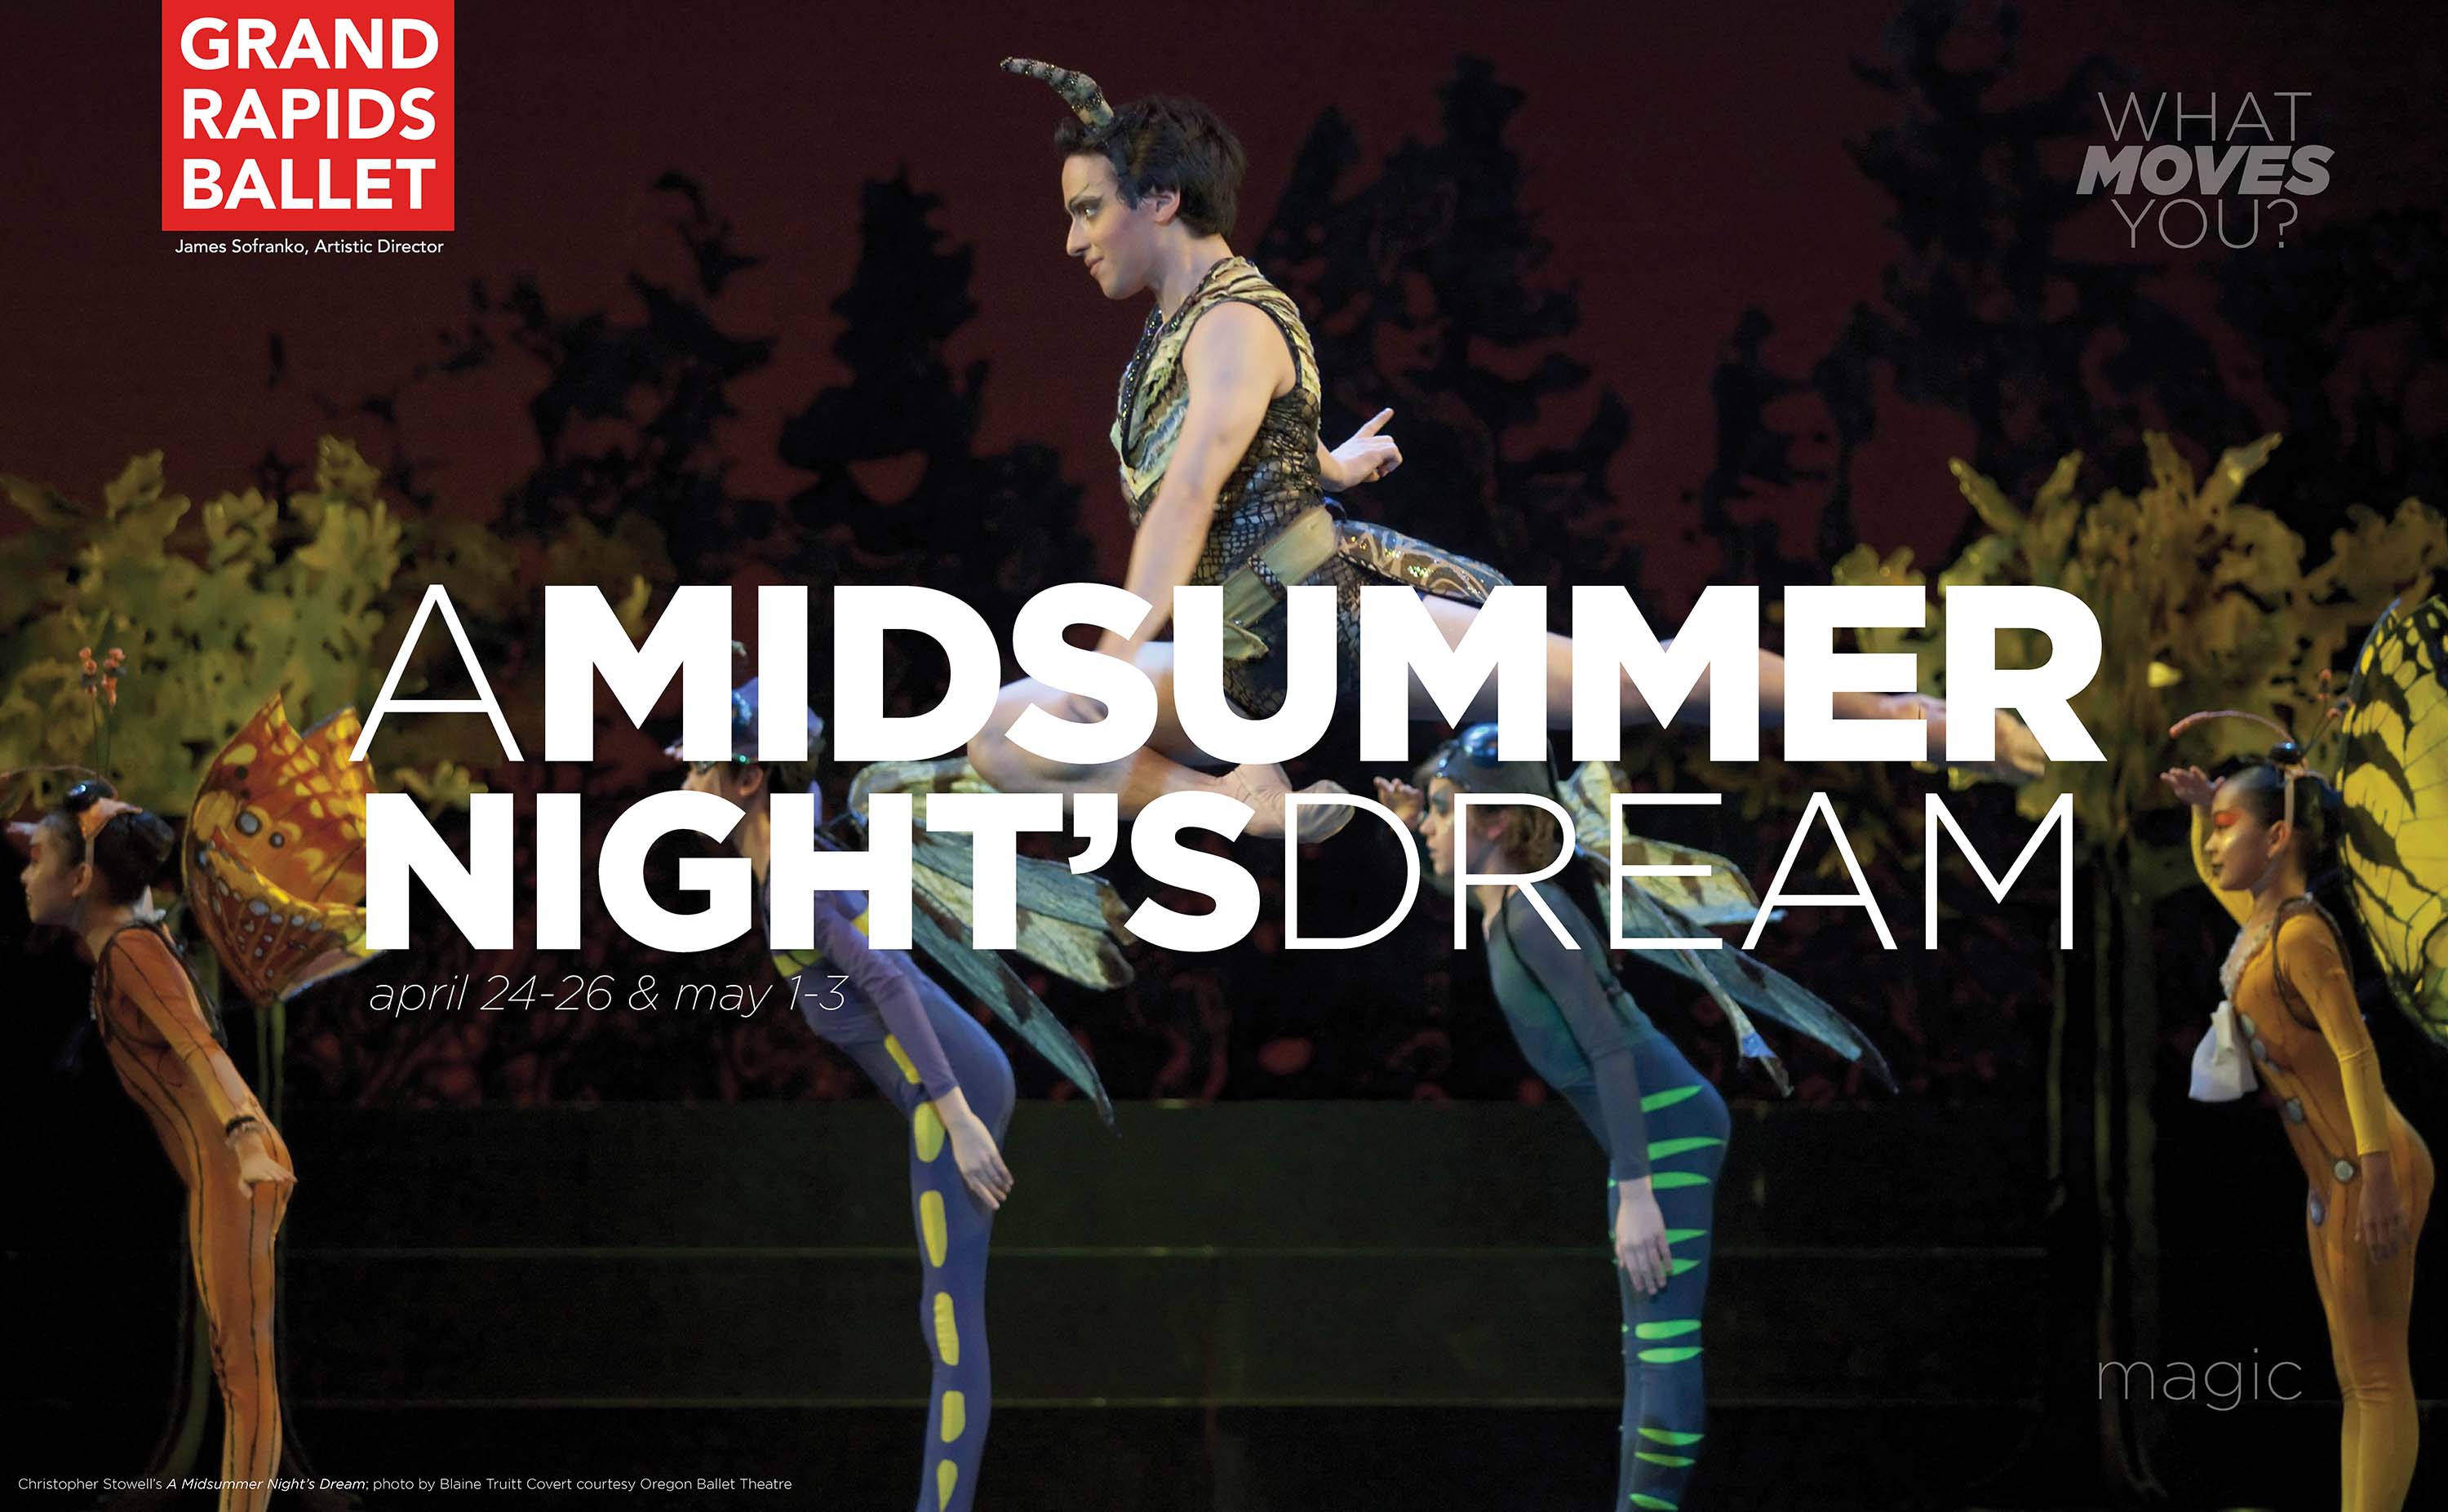 midsummer night's dream grand rapids ballet michigan dance 19-20 season